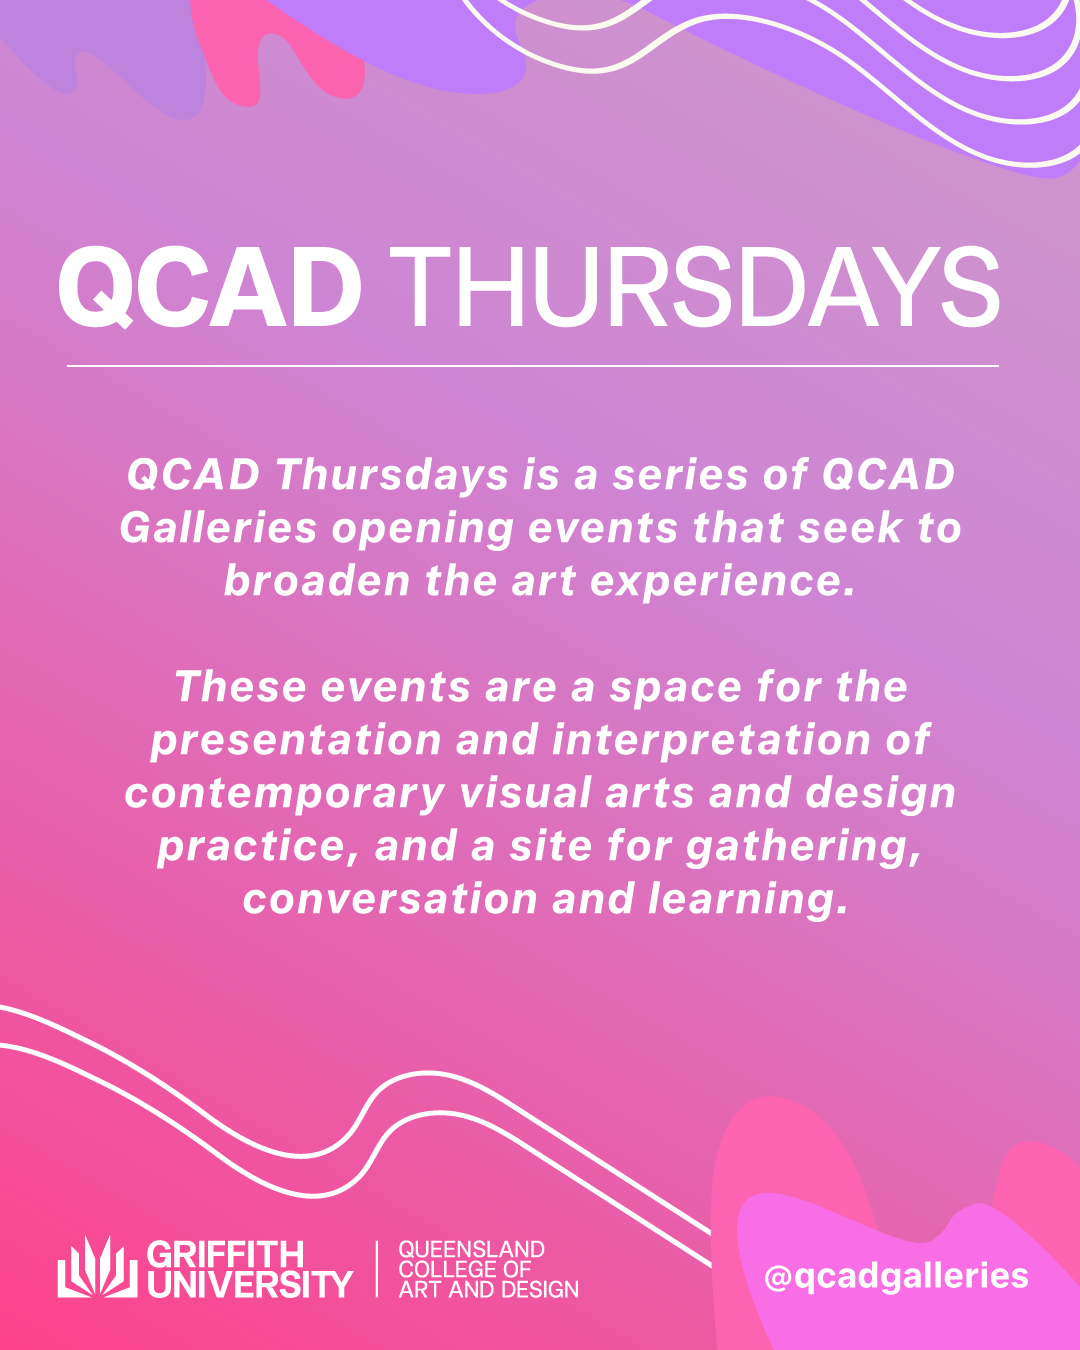 QCAD Thursdays: Trimester 1